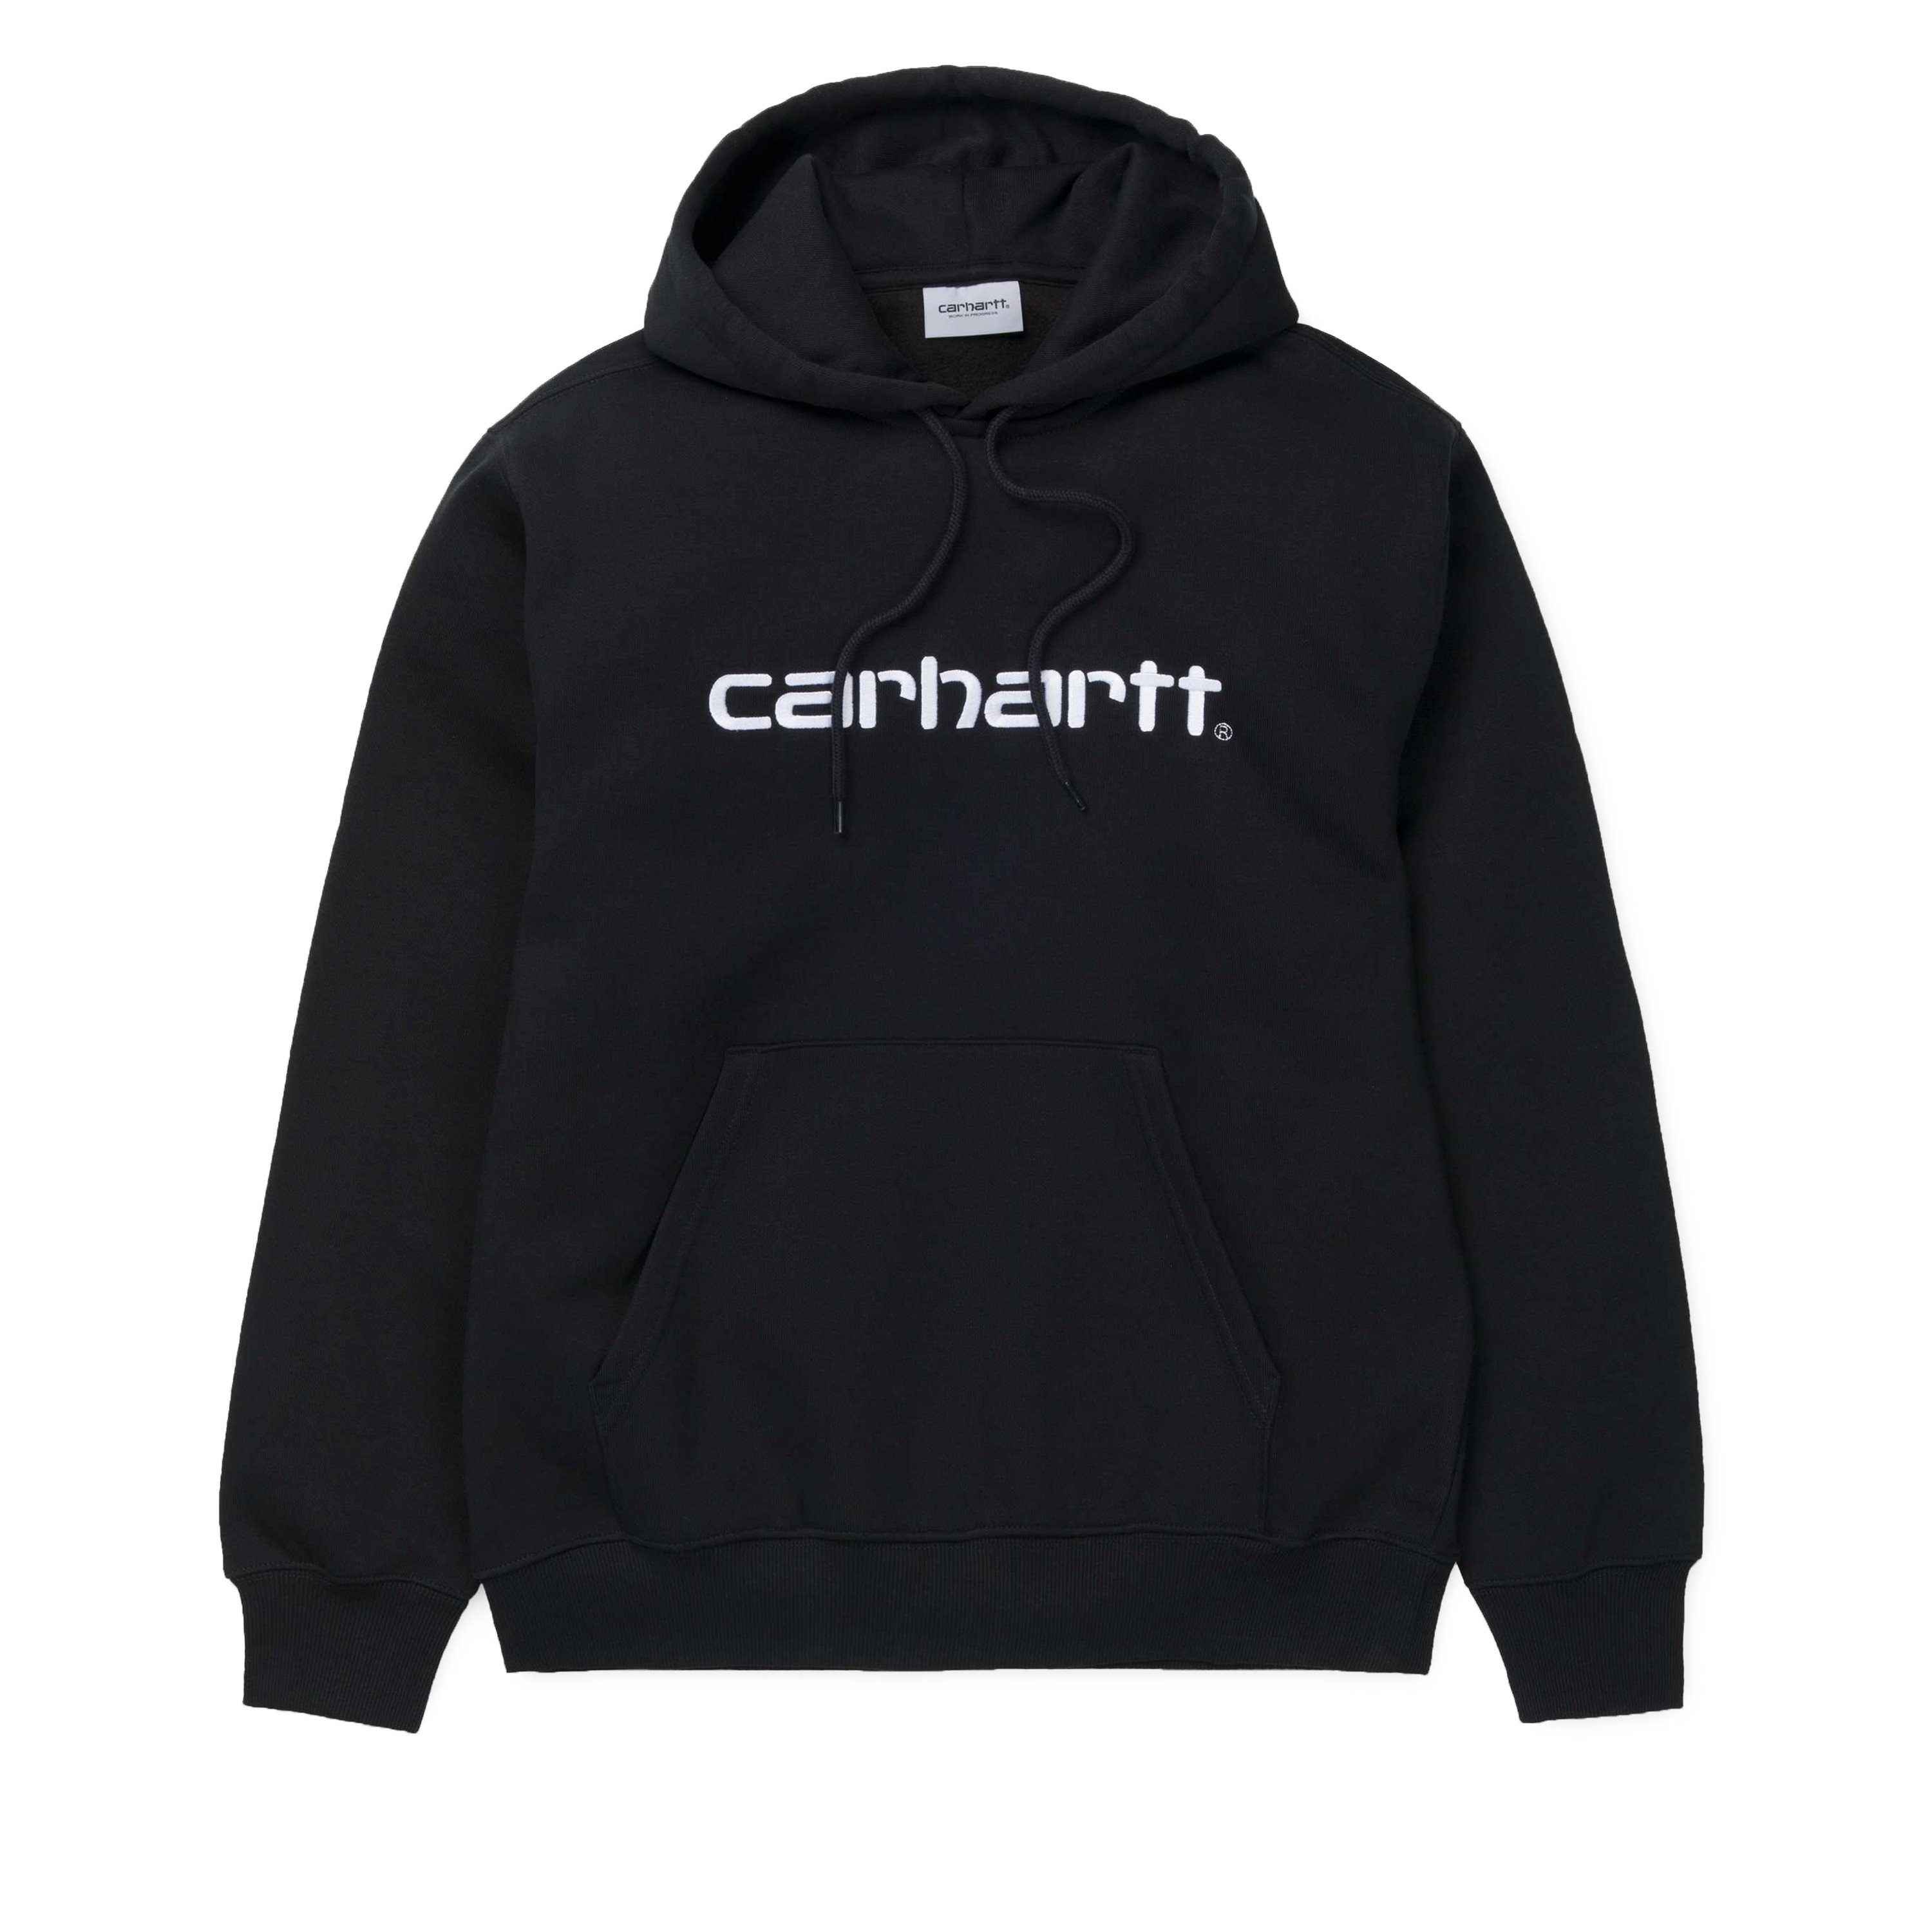 Carhartt Pullover Hooded Sweatshirt (Black/White) - I025479.89.91.03 ...